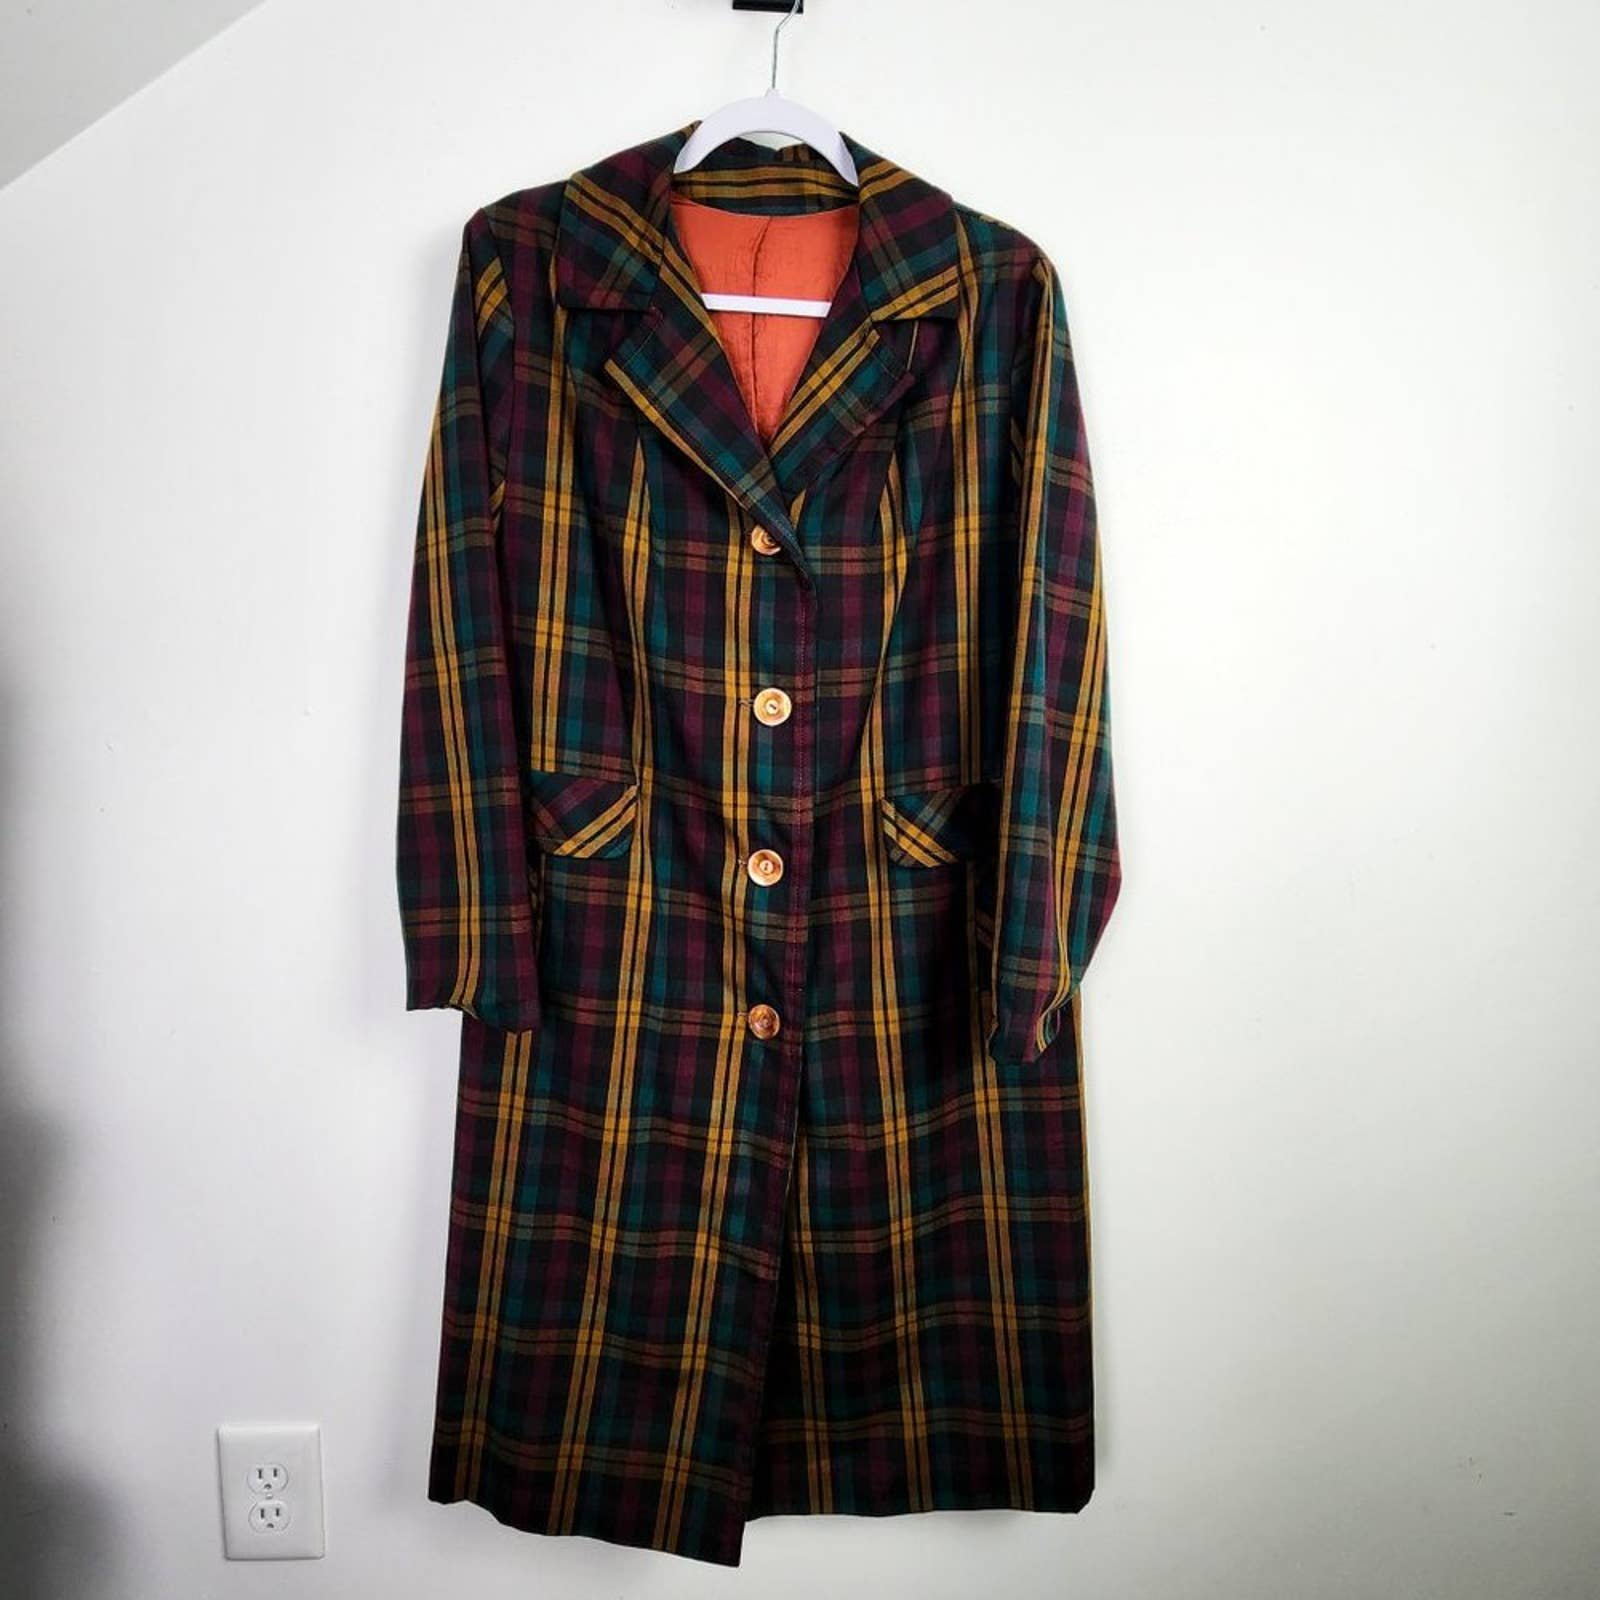 High quality Vintage Plaid Trench Coat Size Medium 70s Retro Colorful Dark Academia Spring mNccEKISm Cheap